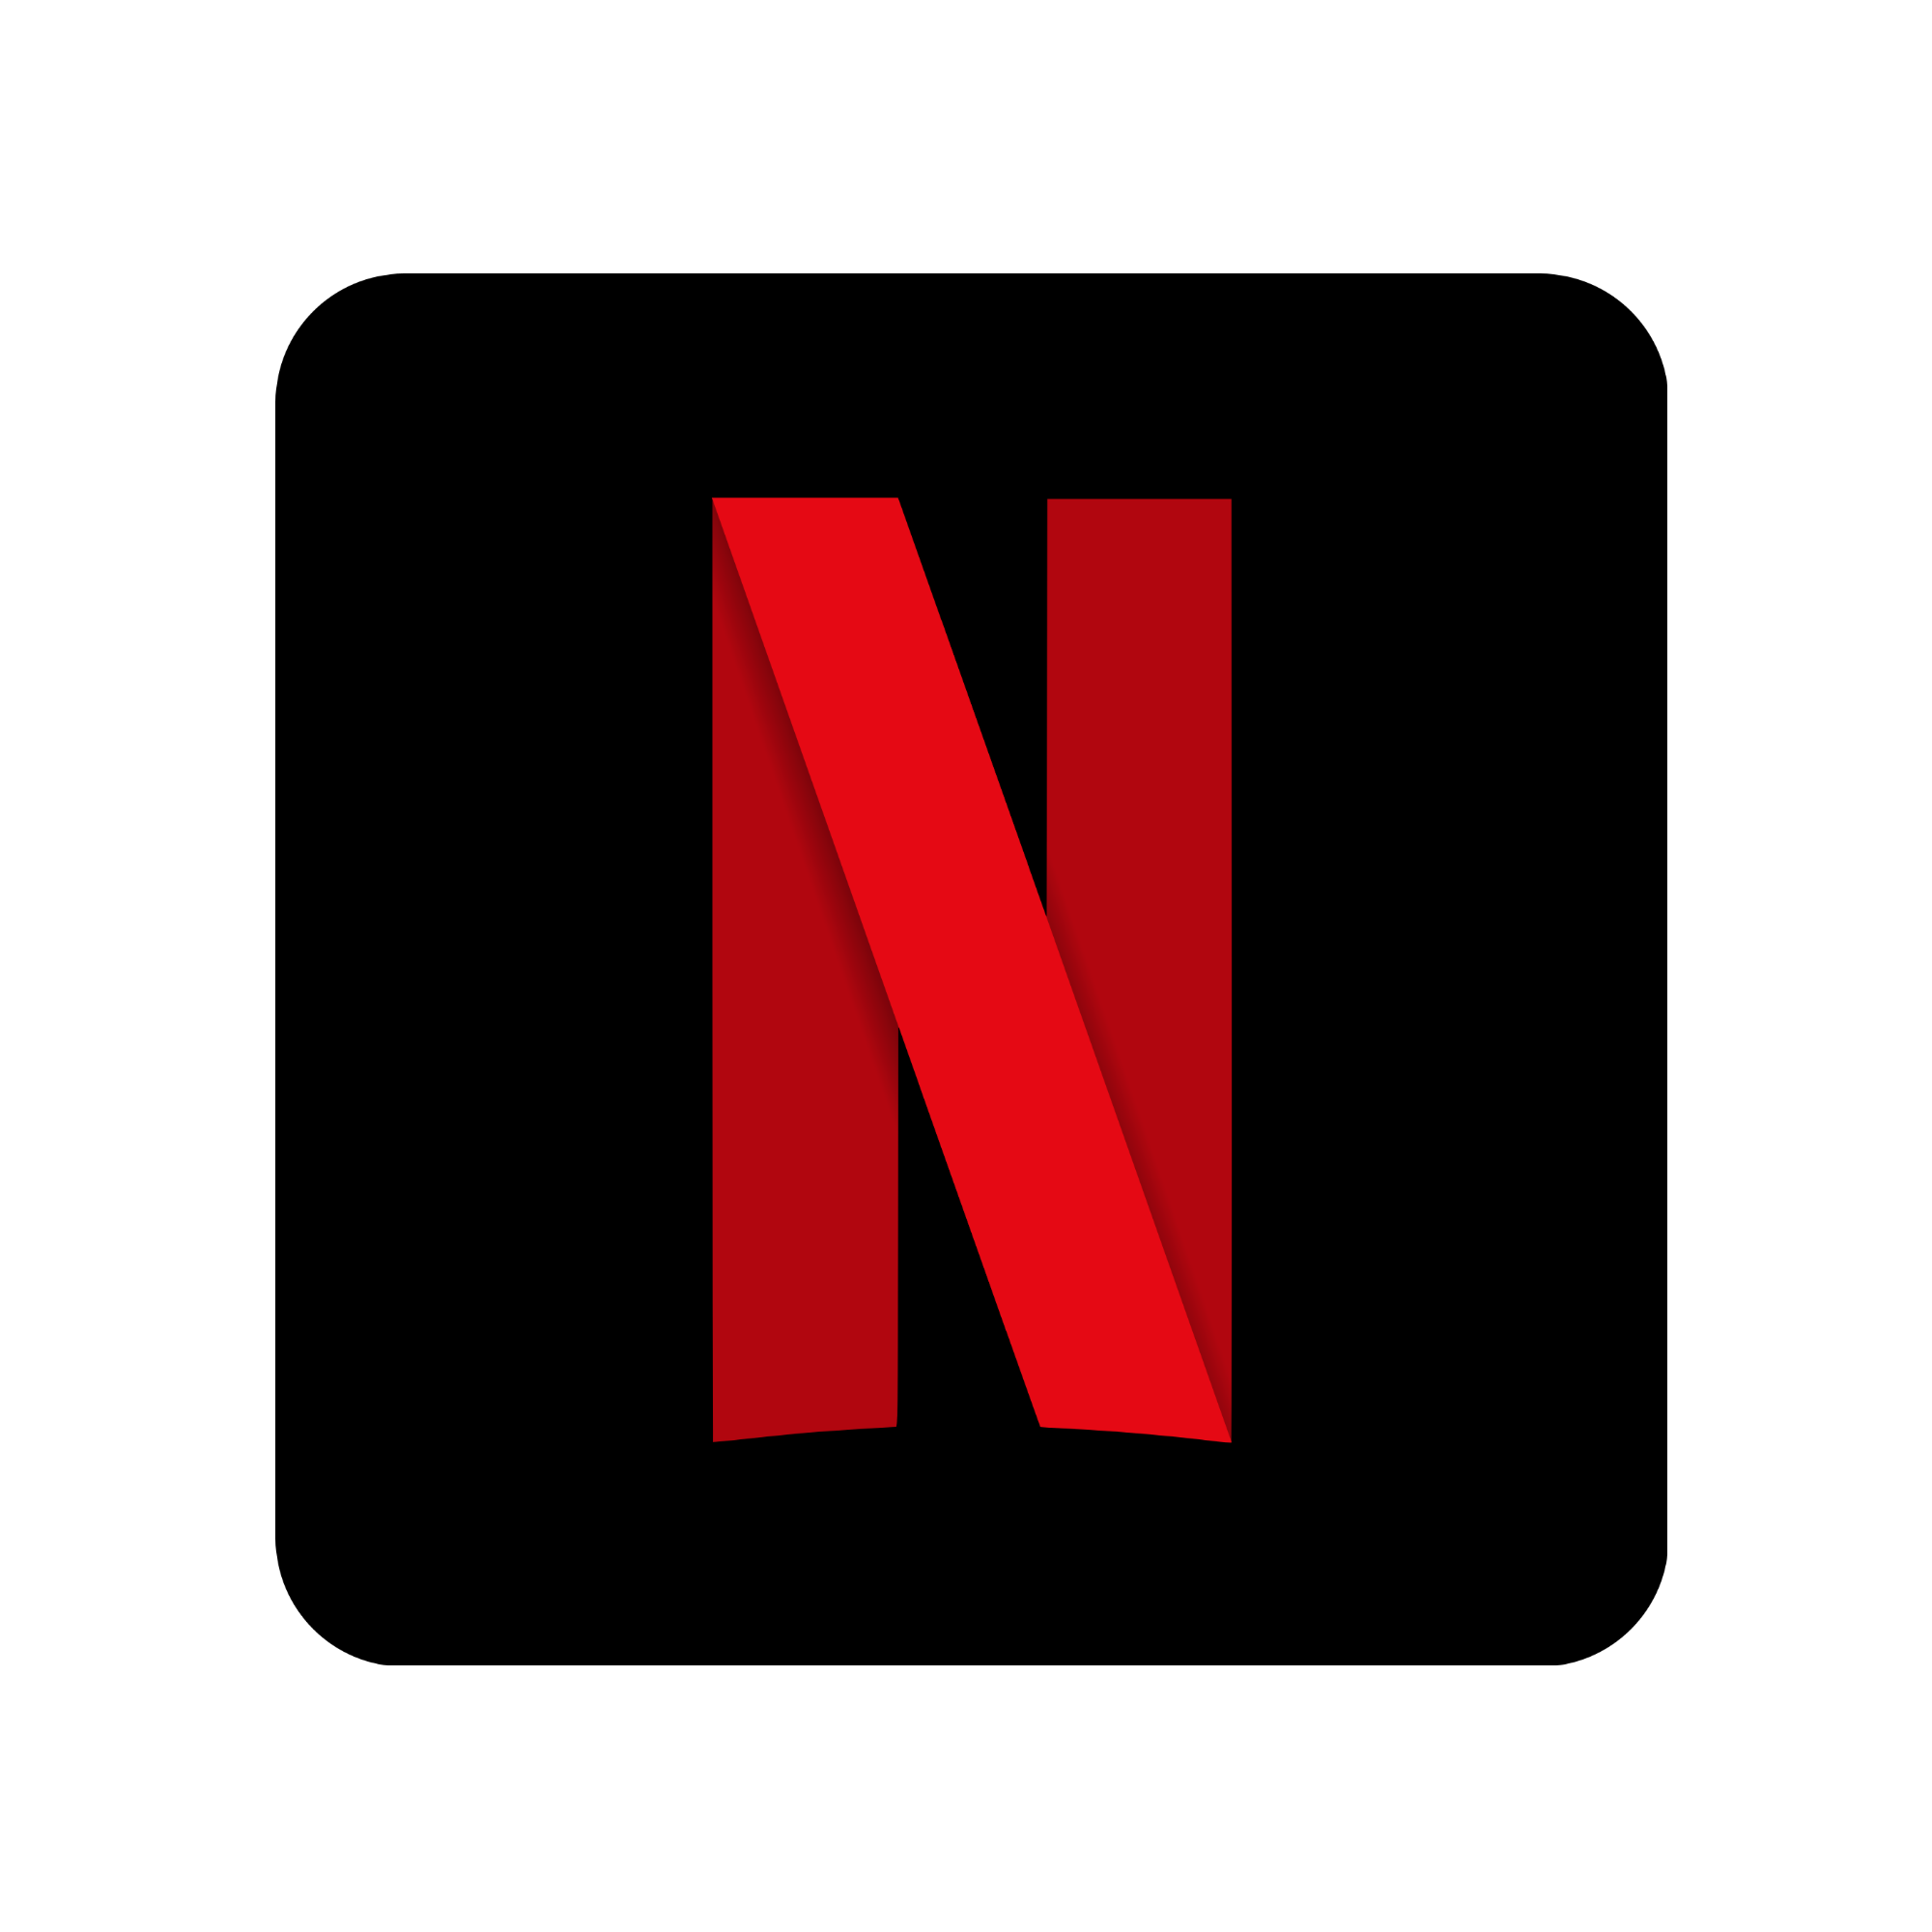 Netflix logo PNG images free download